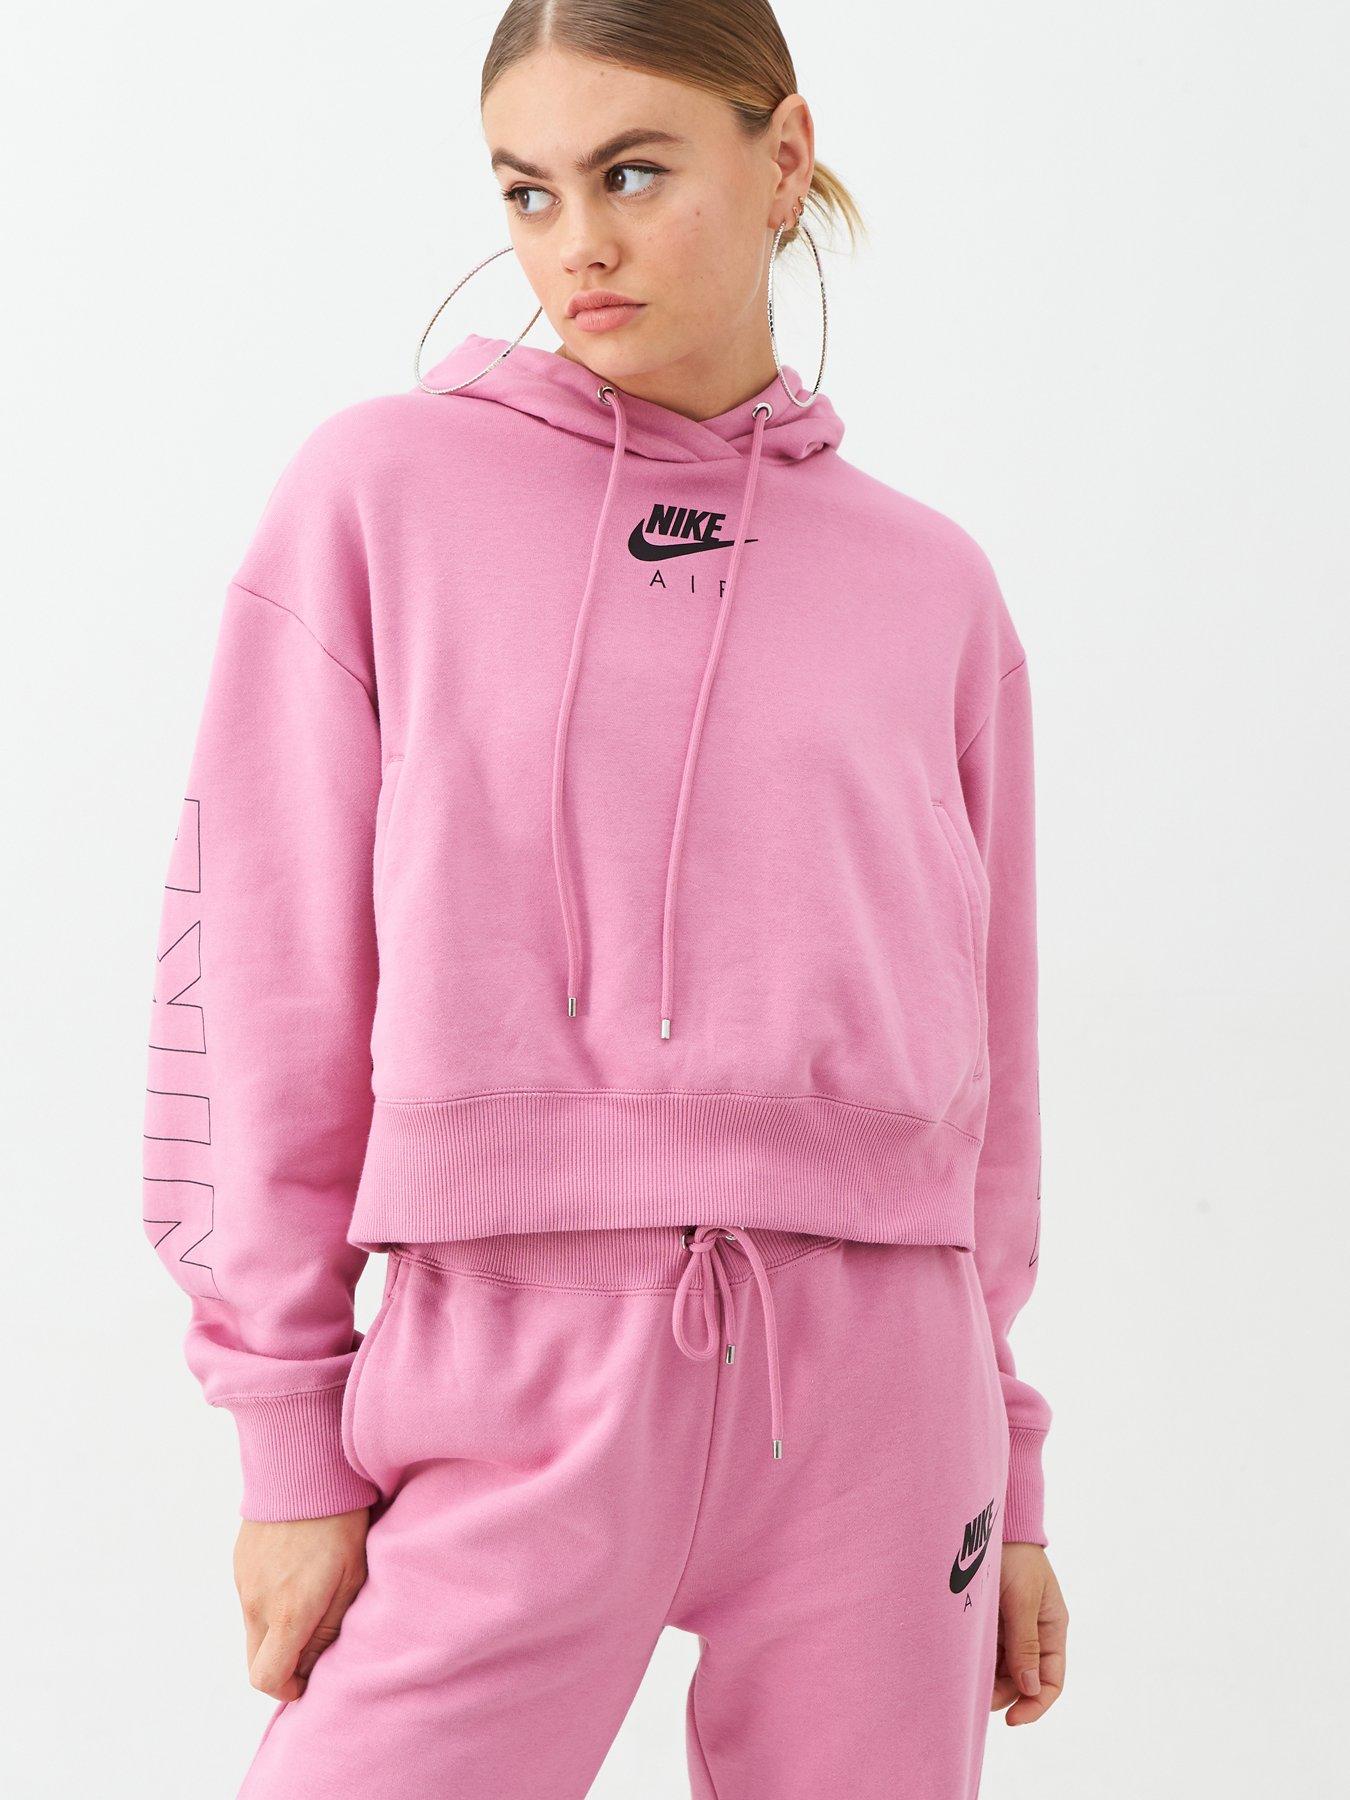 Hot Pink Nike Hoodie For Sale B5e20 6a4f2 - cropped white nike hoodie roblox